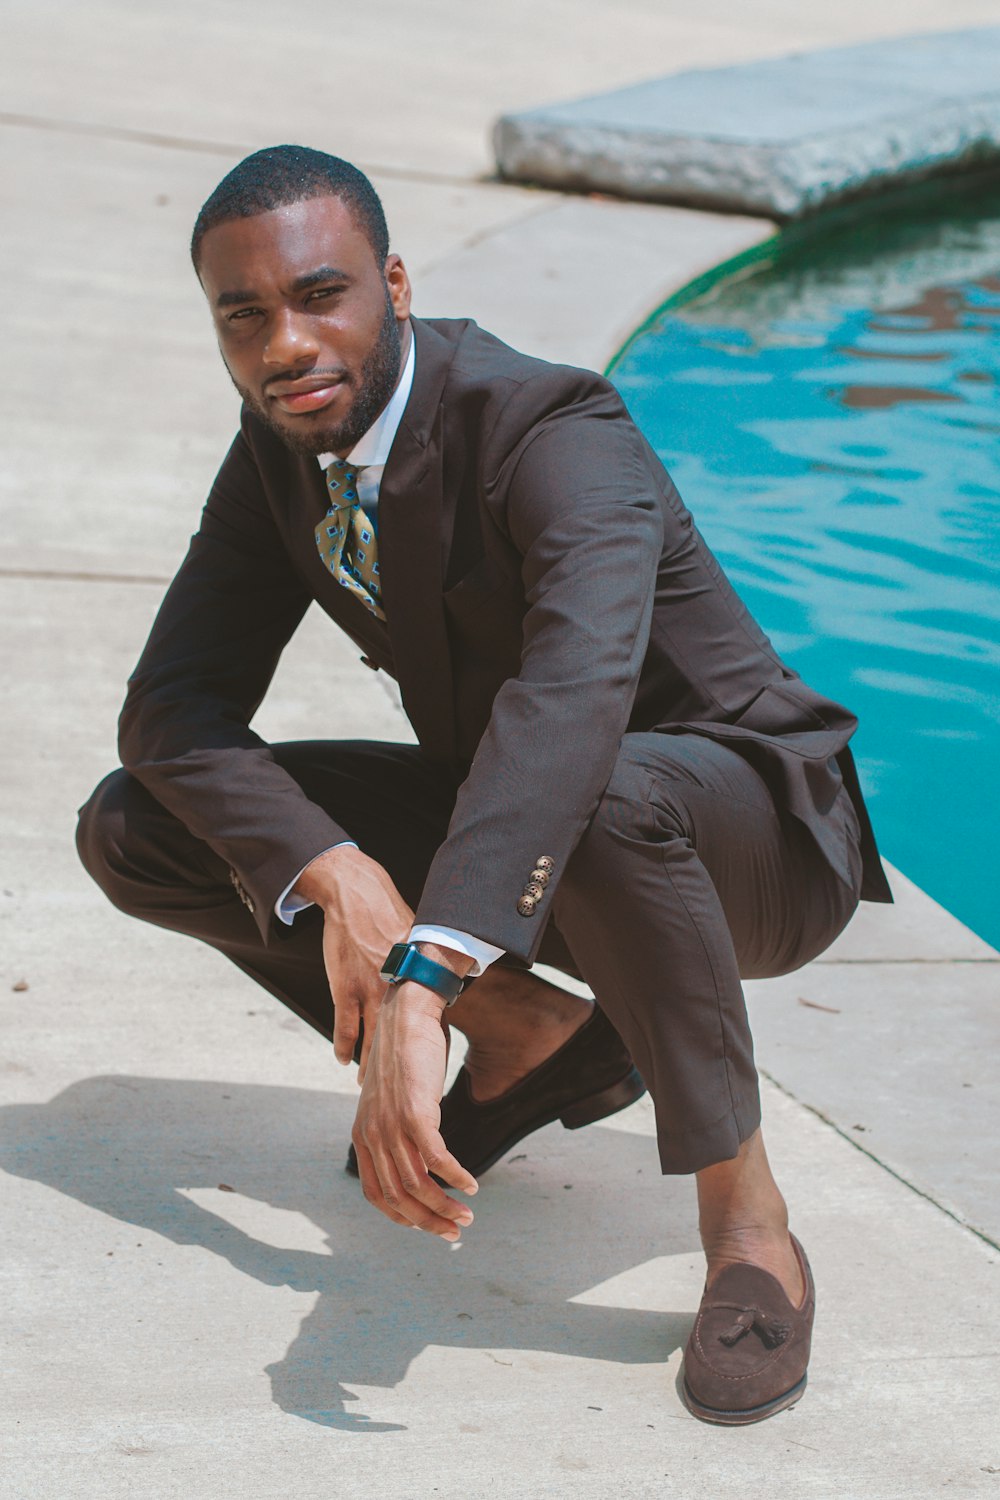 Handsome Black Man Pictures Download Free Images On Unsplash Images, Photos, Reviews